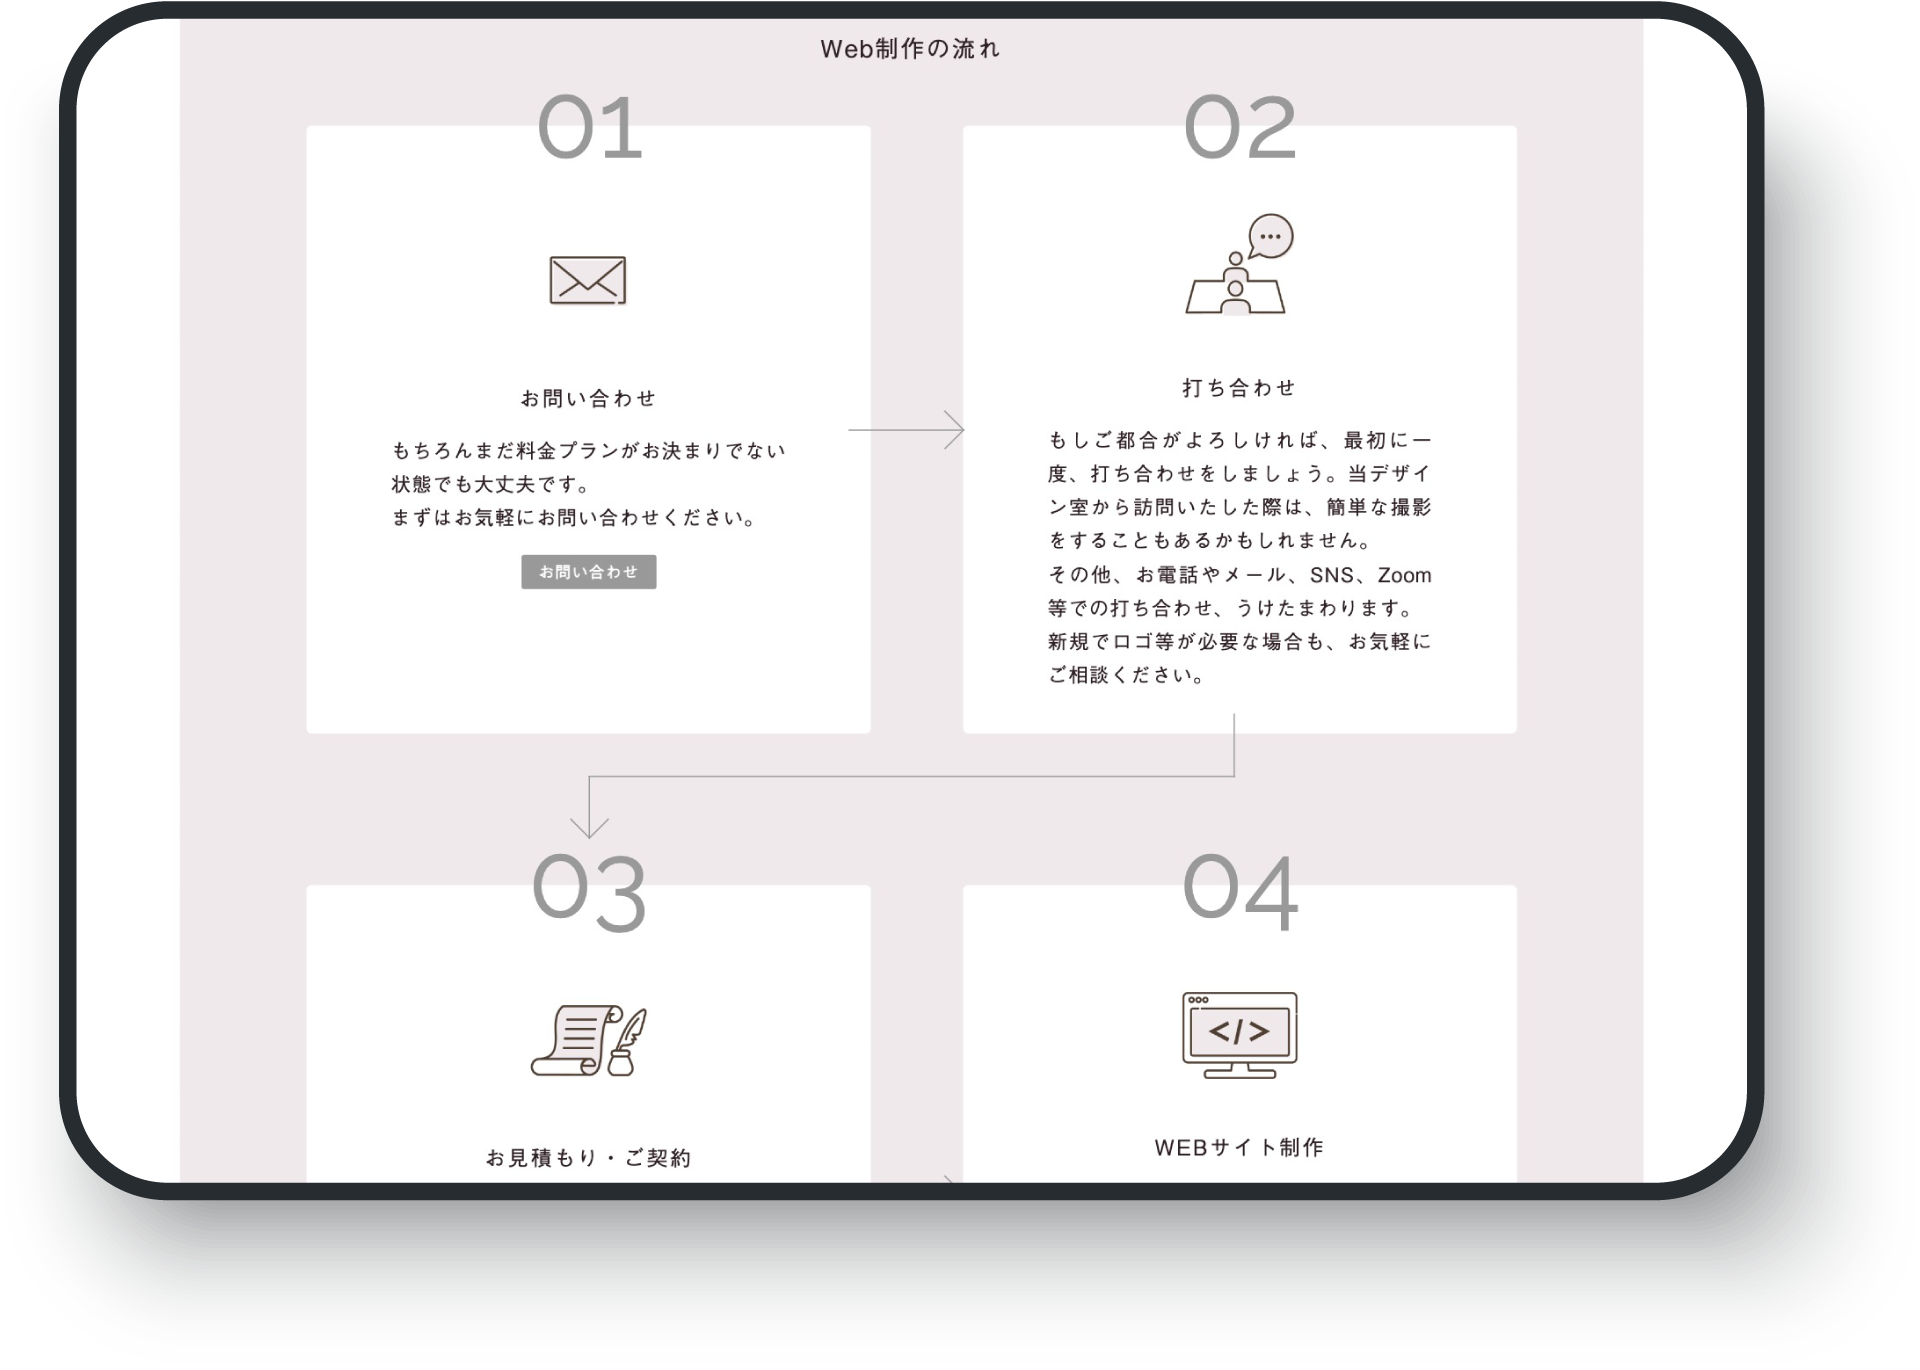 Webデザインテンプレート ポートフォリオ01「ミニチュア」- 料金プランページ-Web制作の流れ